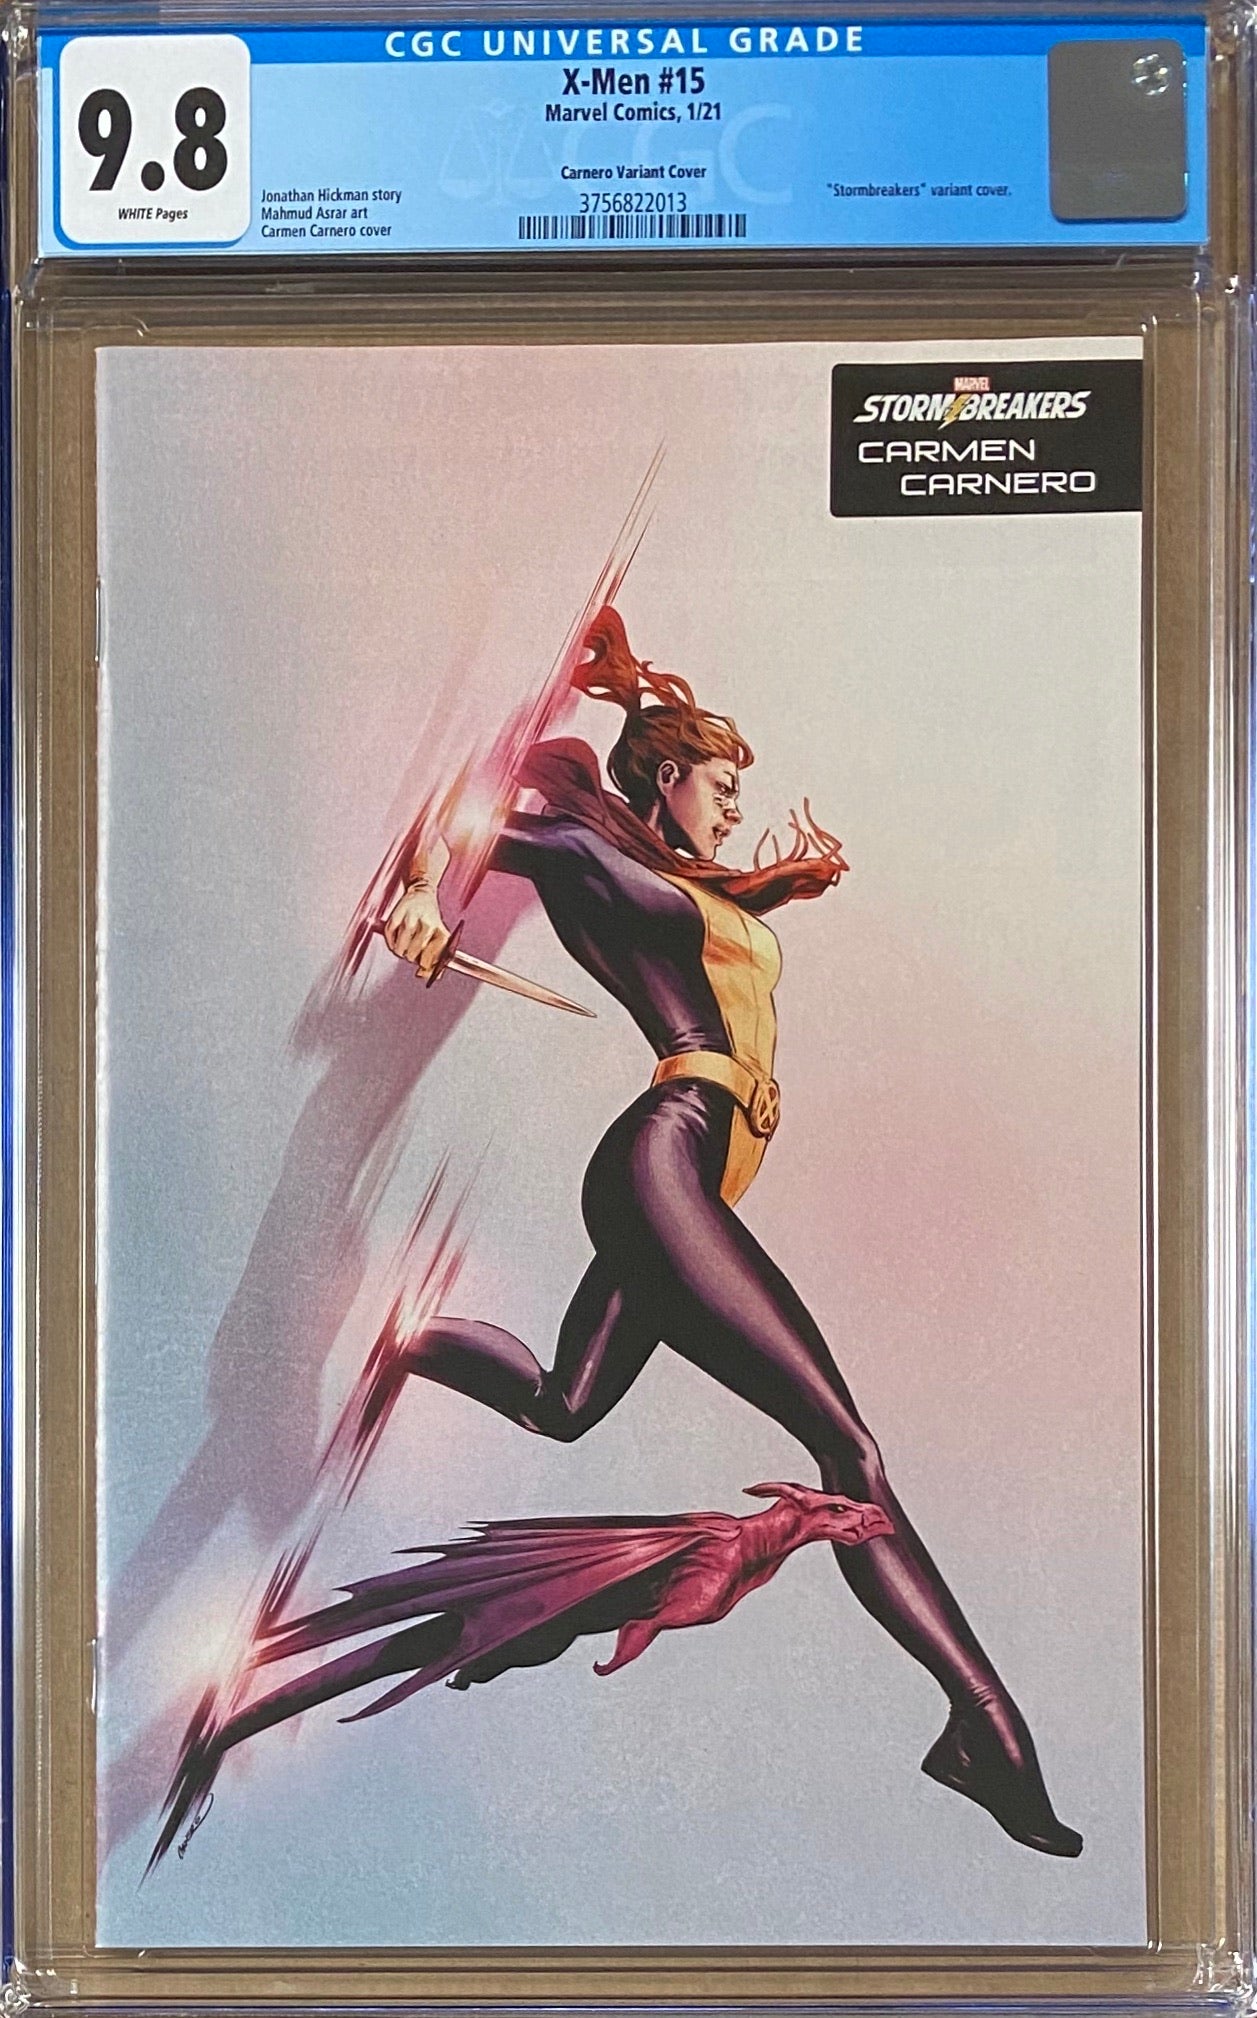 X-Men #15 Carnero One Per Store "Stormbreakers" Variant CGC 9.8